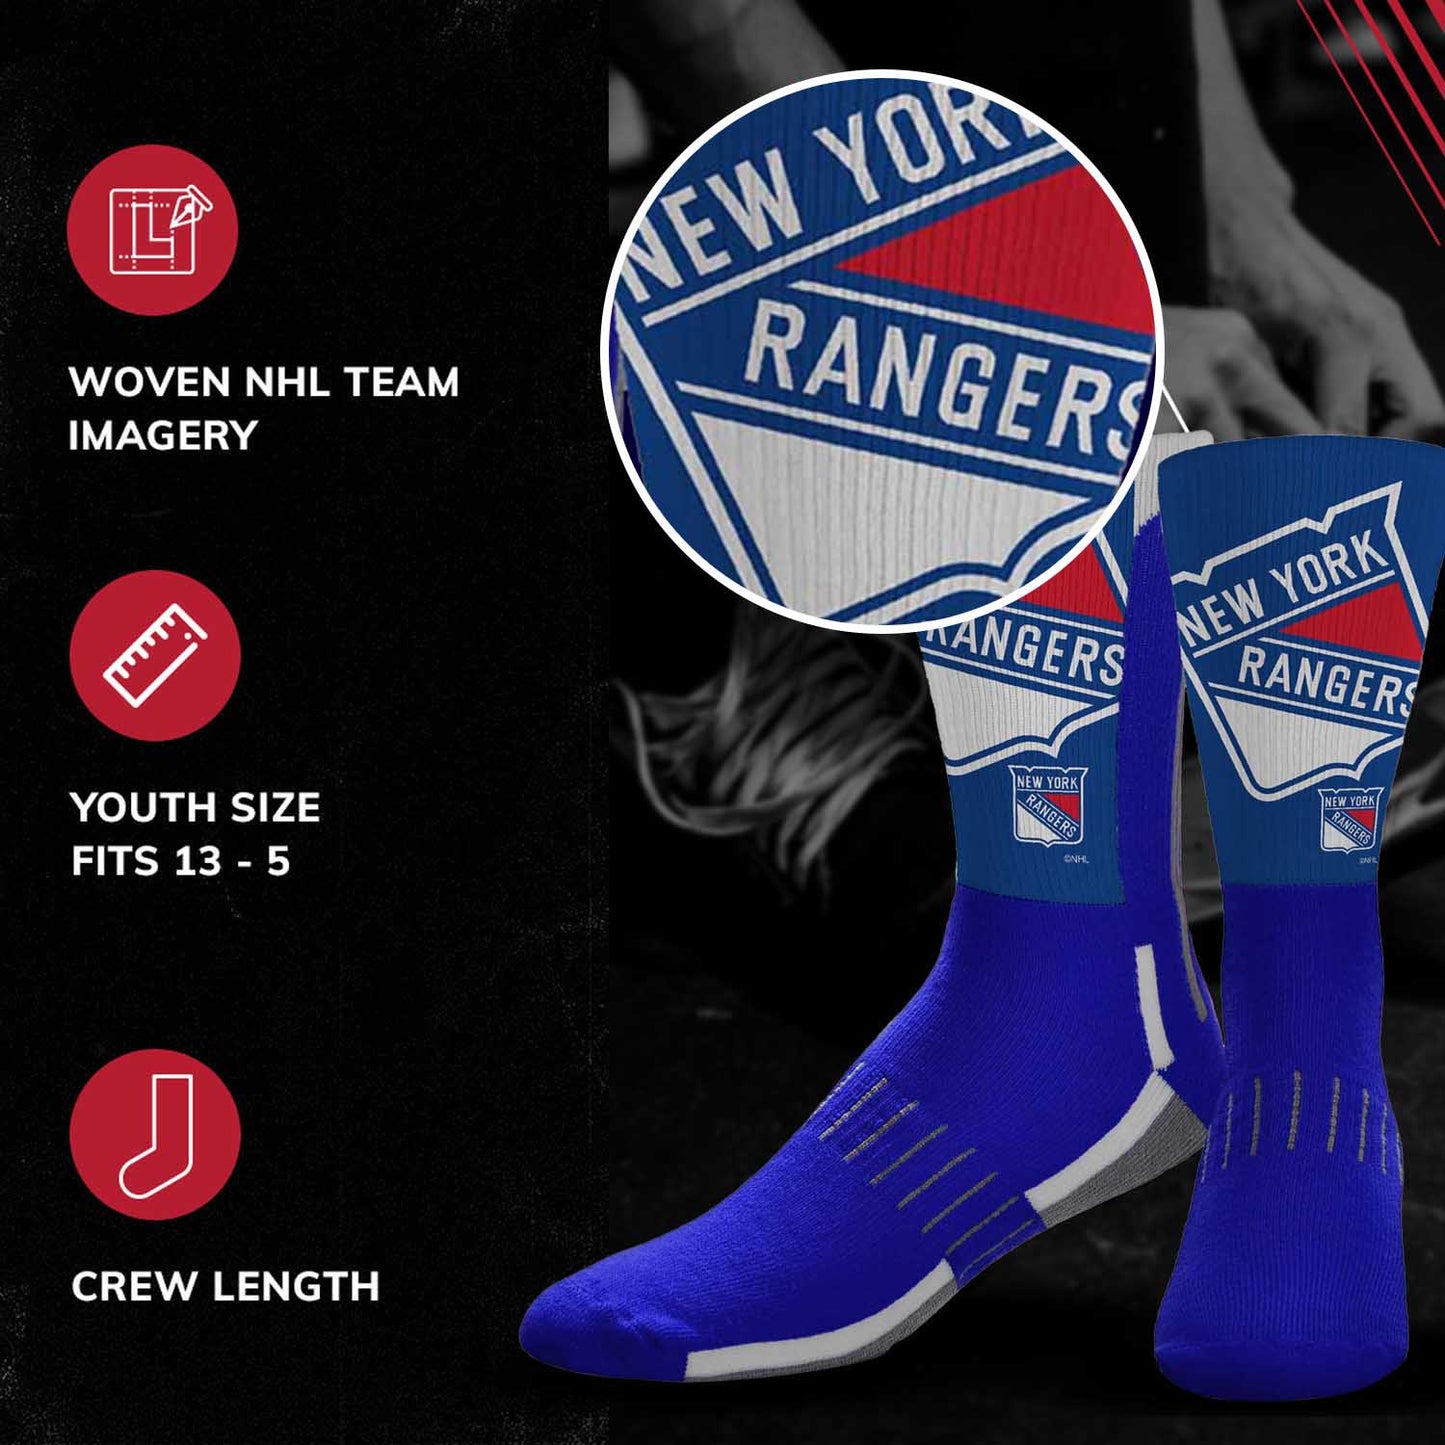 New York Rangers Youth NHL Zoom Curve Team Crew Socks - Royal